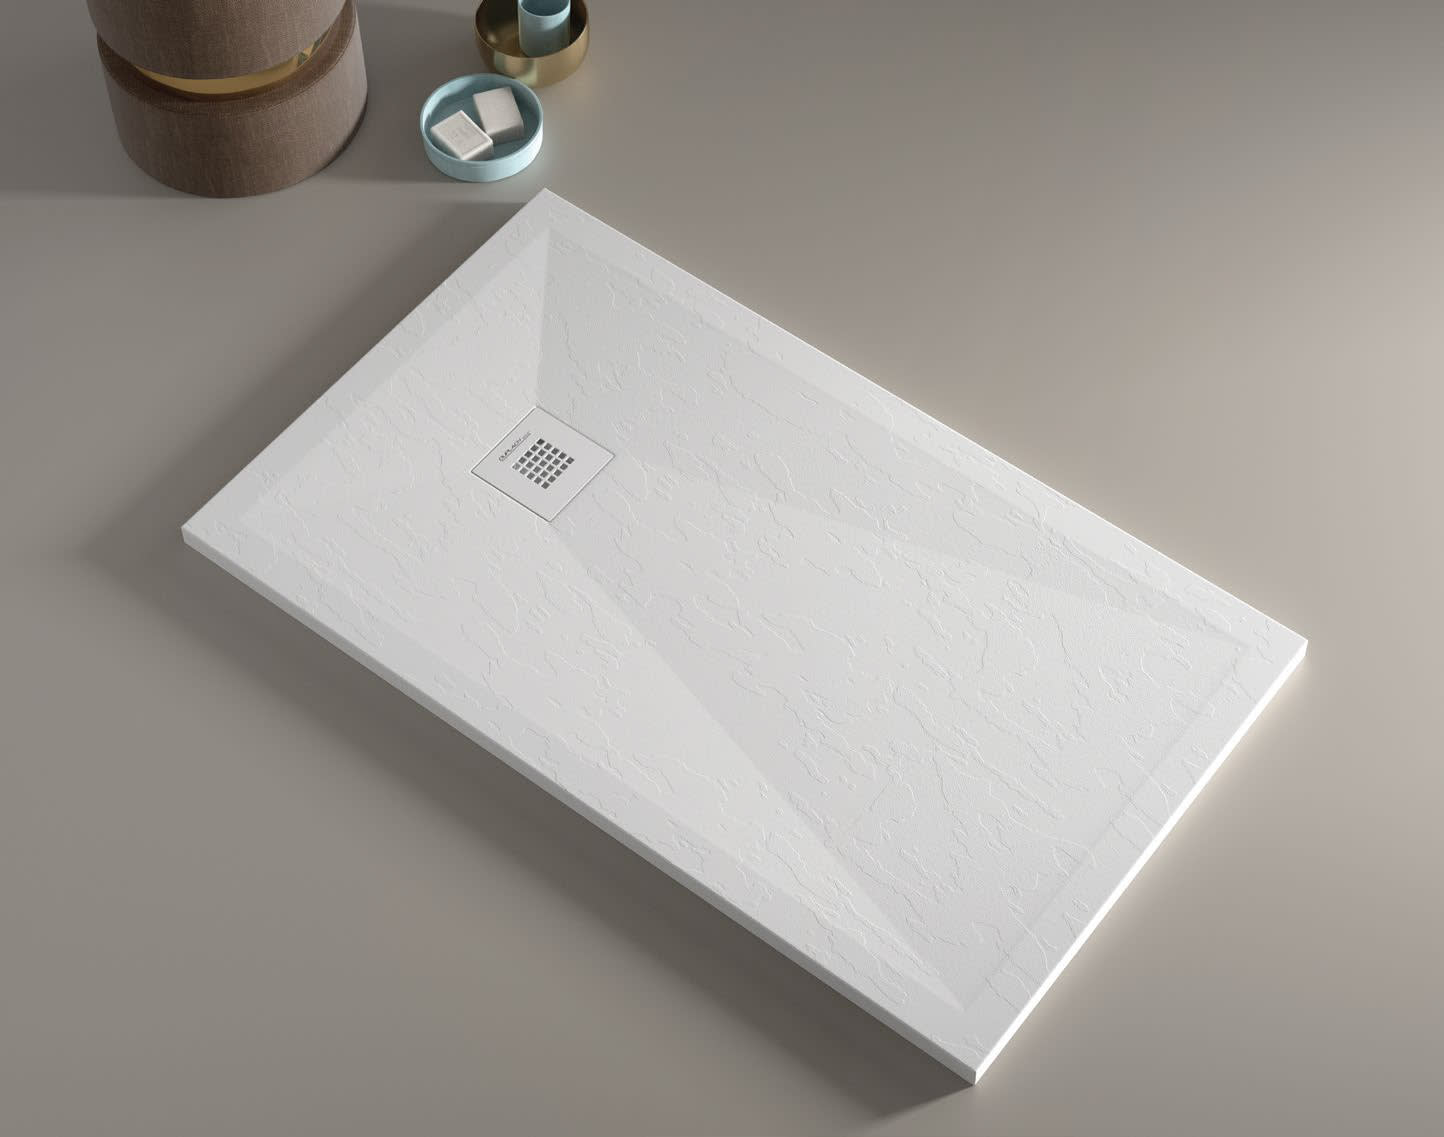 Plato de ducha - Resina - Textura pizarra/piedra - Antideslizante - Color  blanco - 80X100 - VENUS